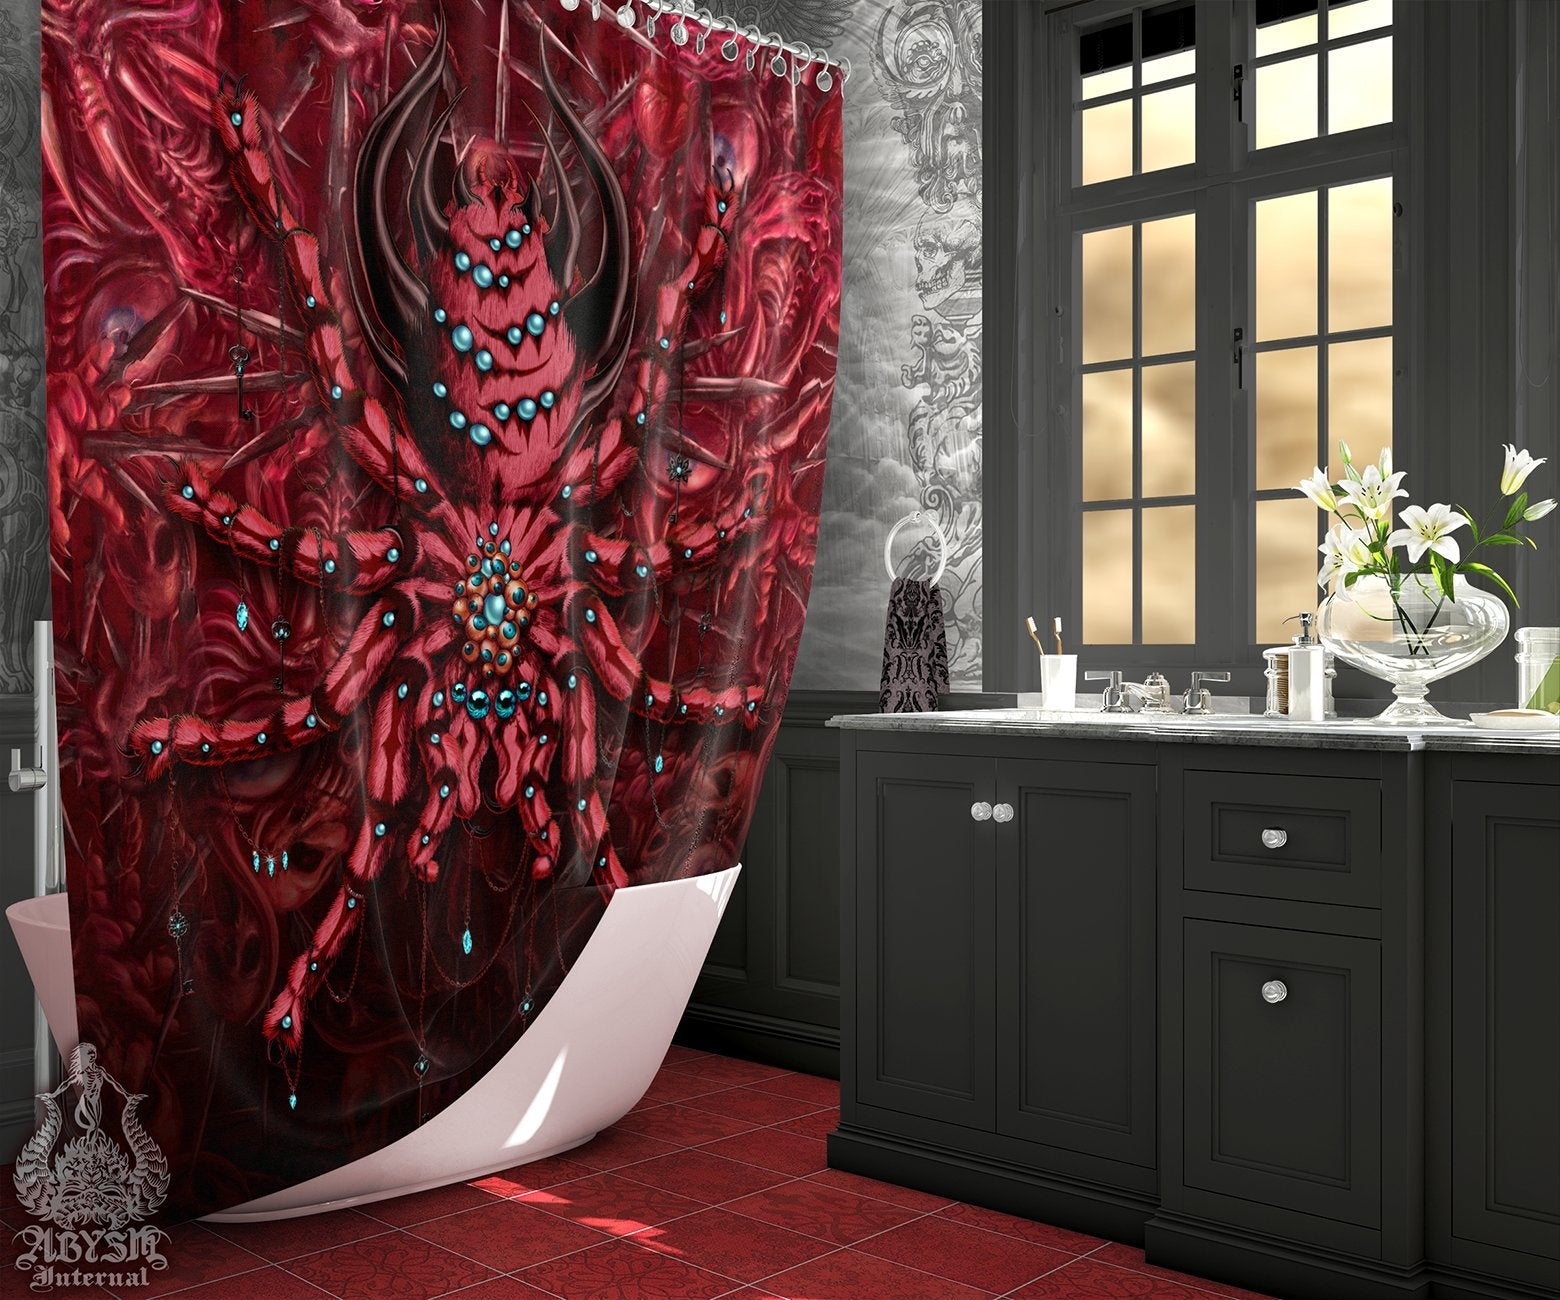 Horror Shower Curtain, Halloween Bathroom Decor, Scary Home - Spider, Gore and Blood, Tarantula Art - Abysm Internal